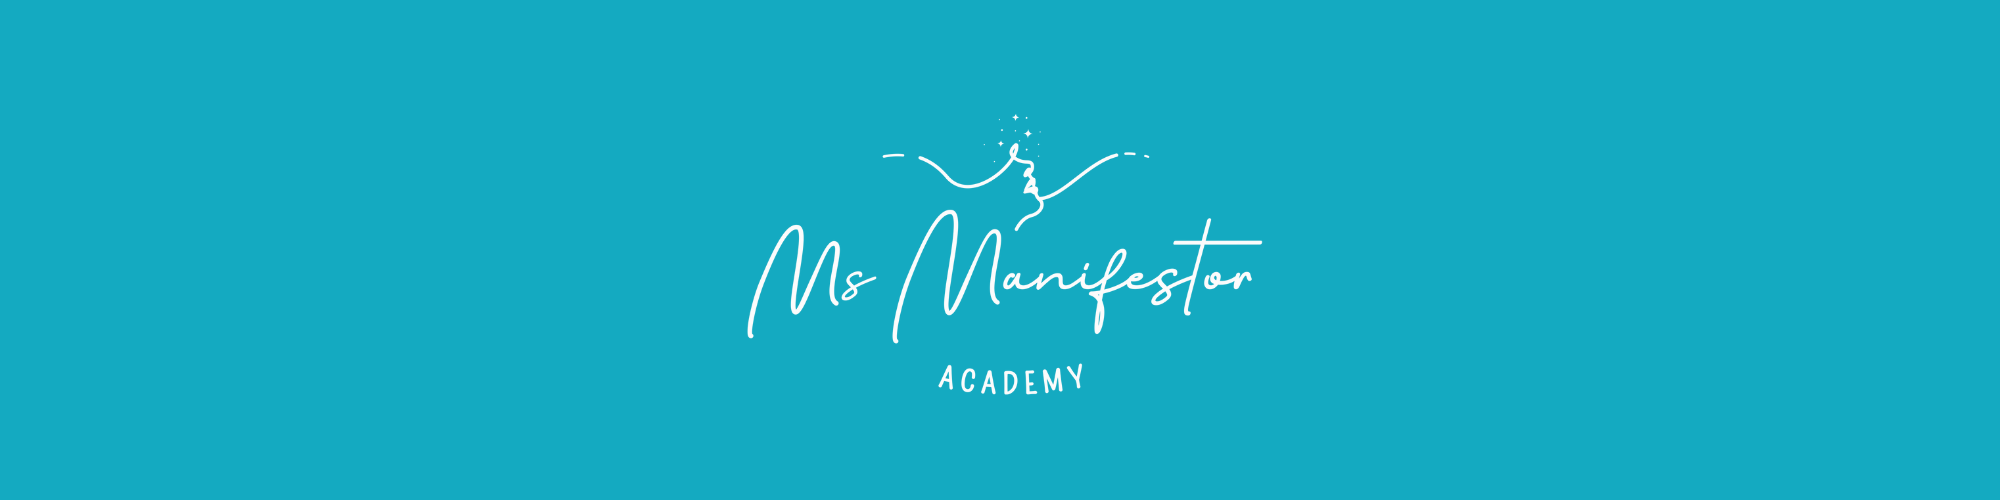 Ms Manifestor Free Academy